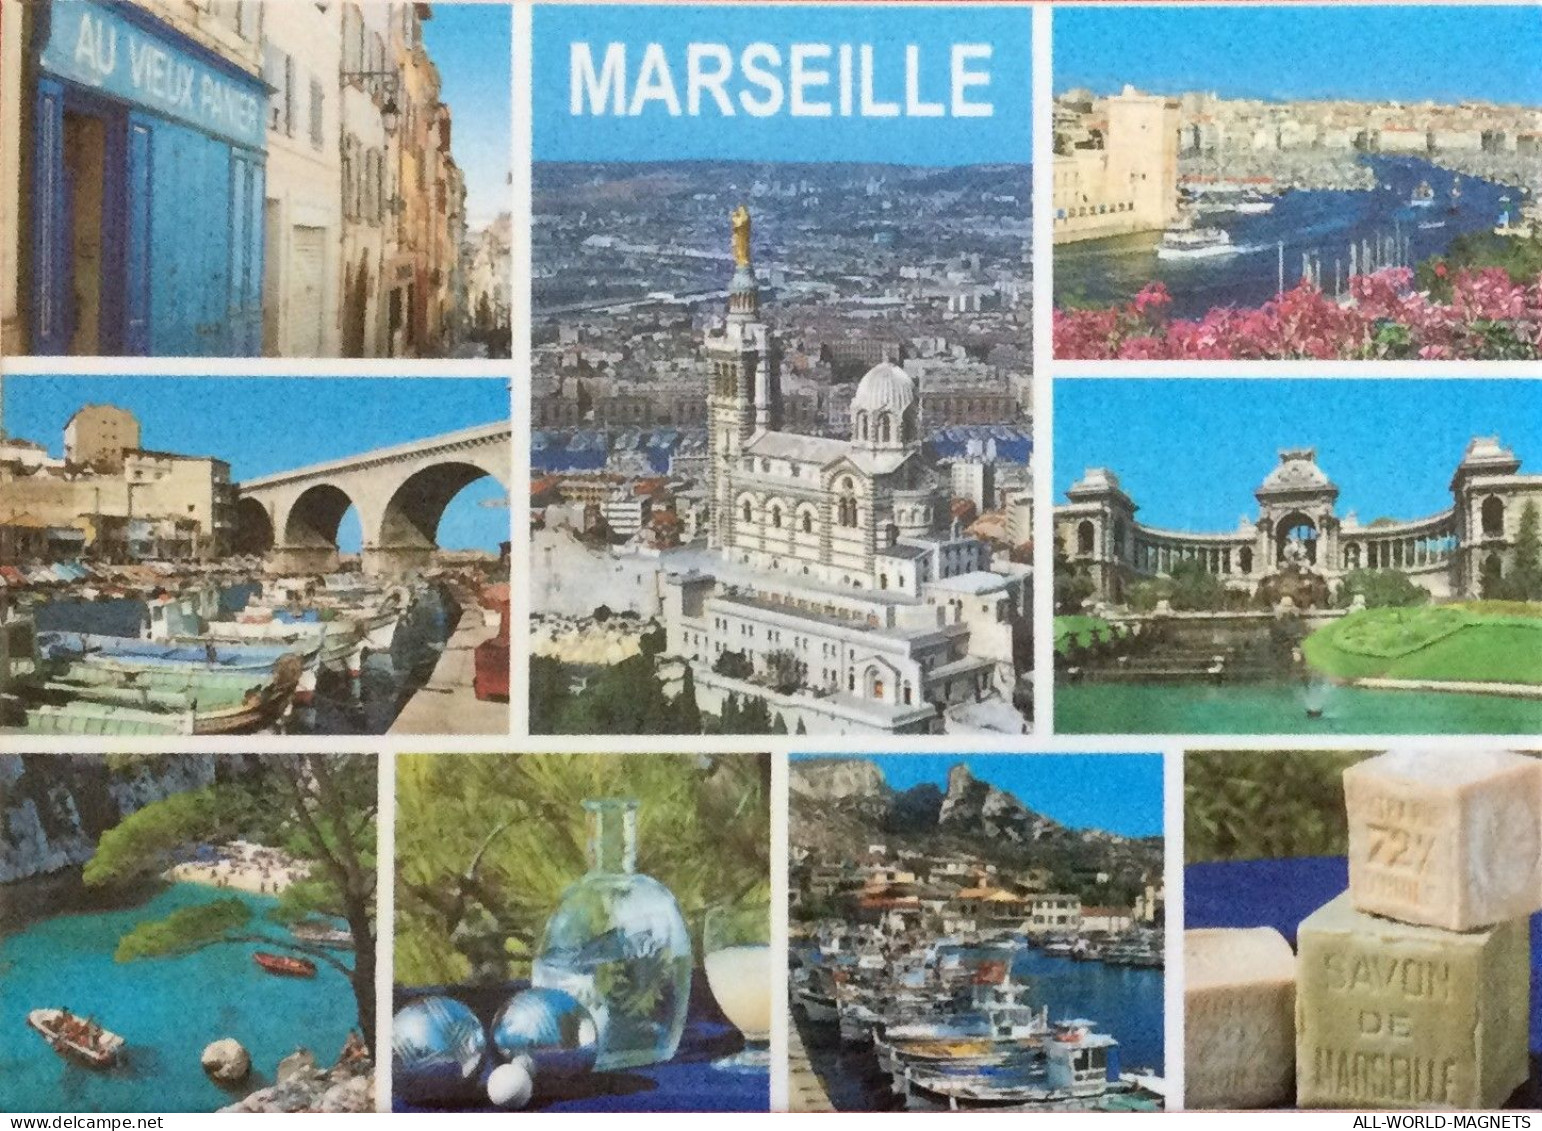 Marseille City Views Fridge Magnet, France - Magnets